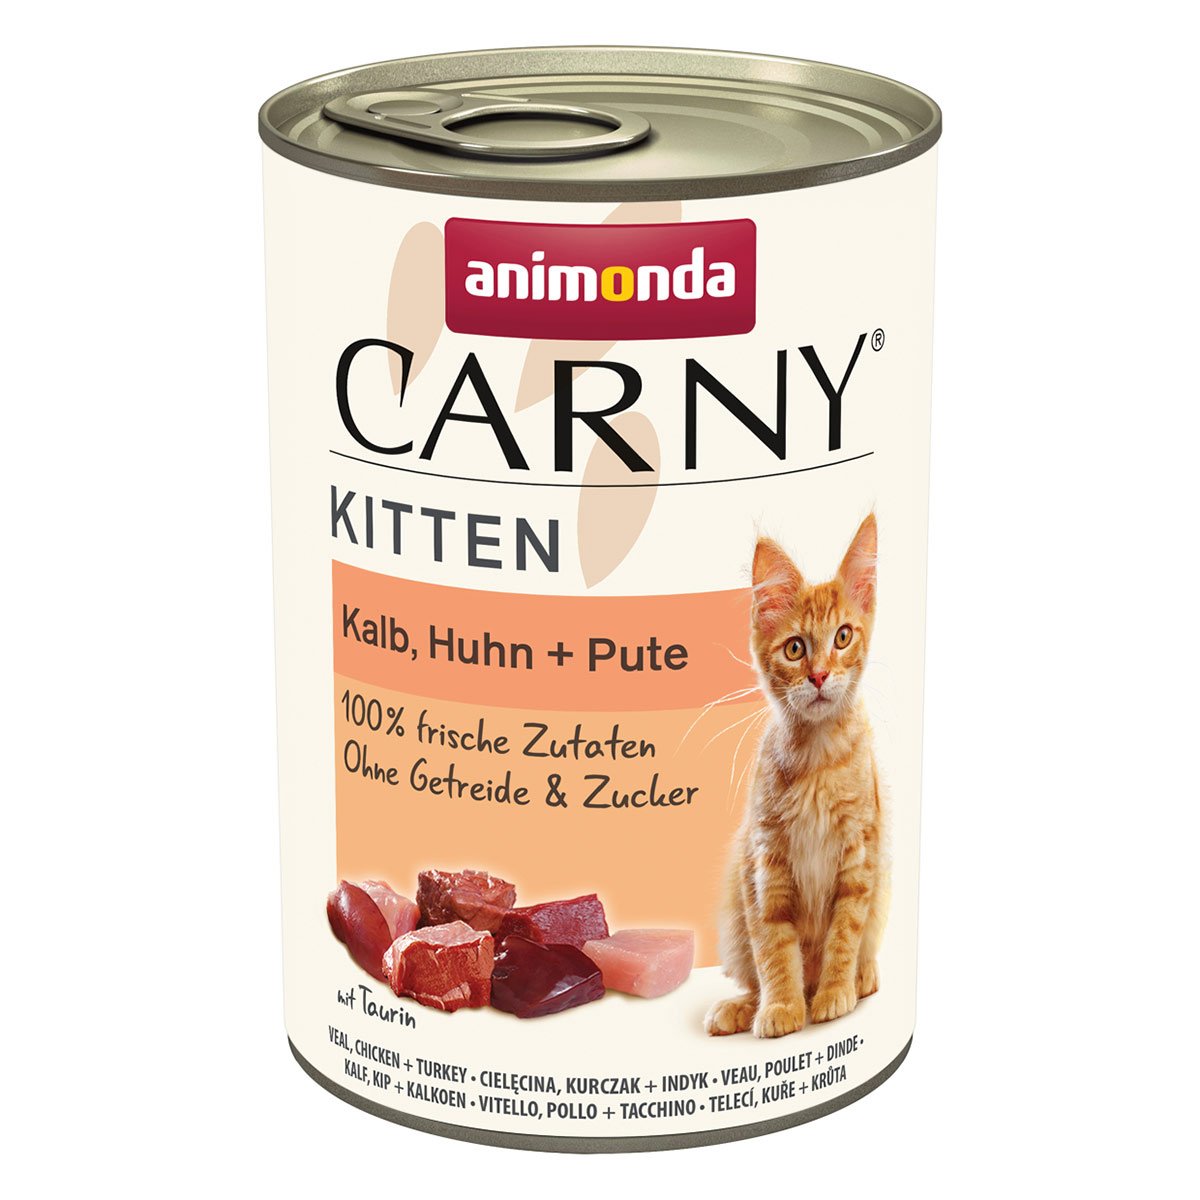 animonda Carny Kitten Kalb, Huhn + Pute 12x400g von animonda Carny